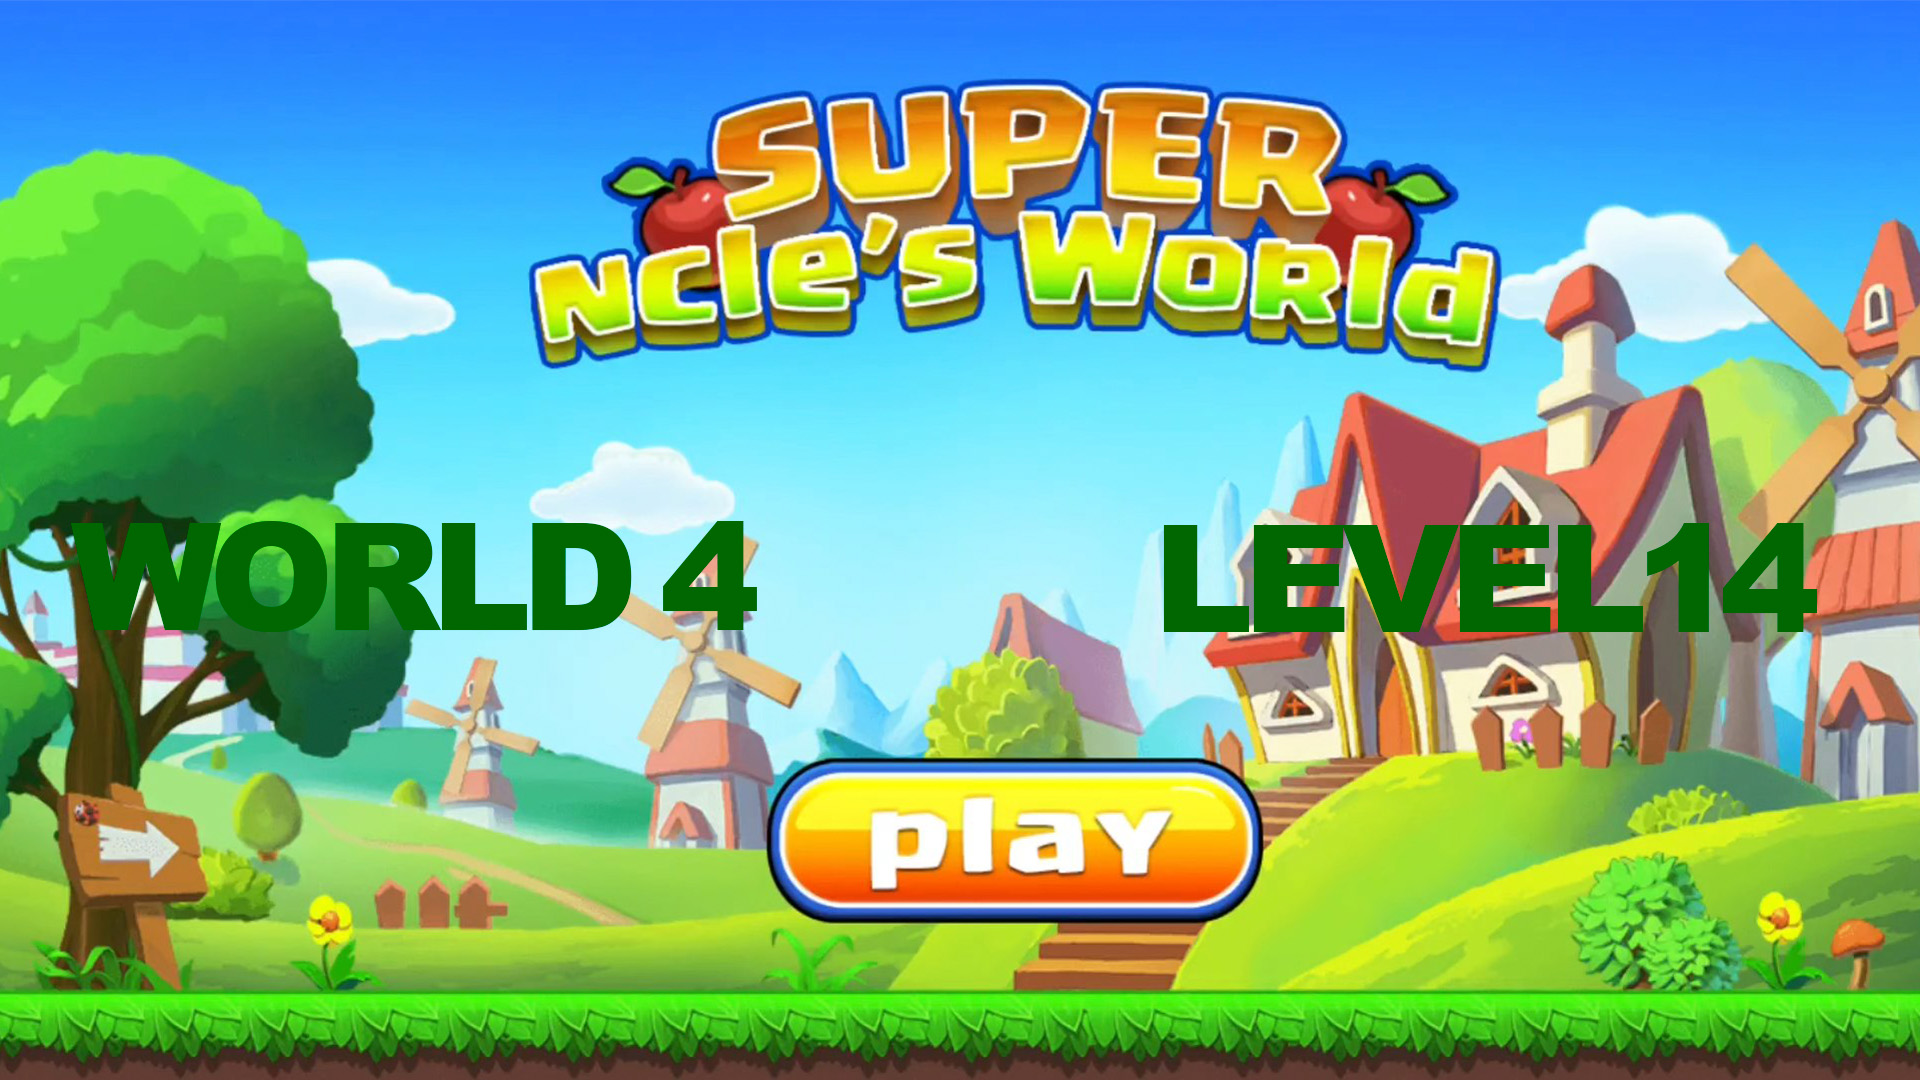 Super ncle's  World 4. Level 14.